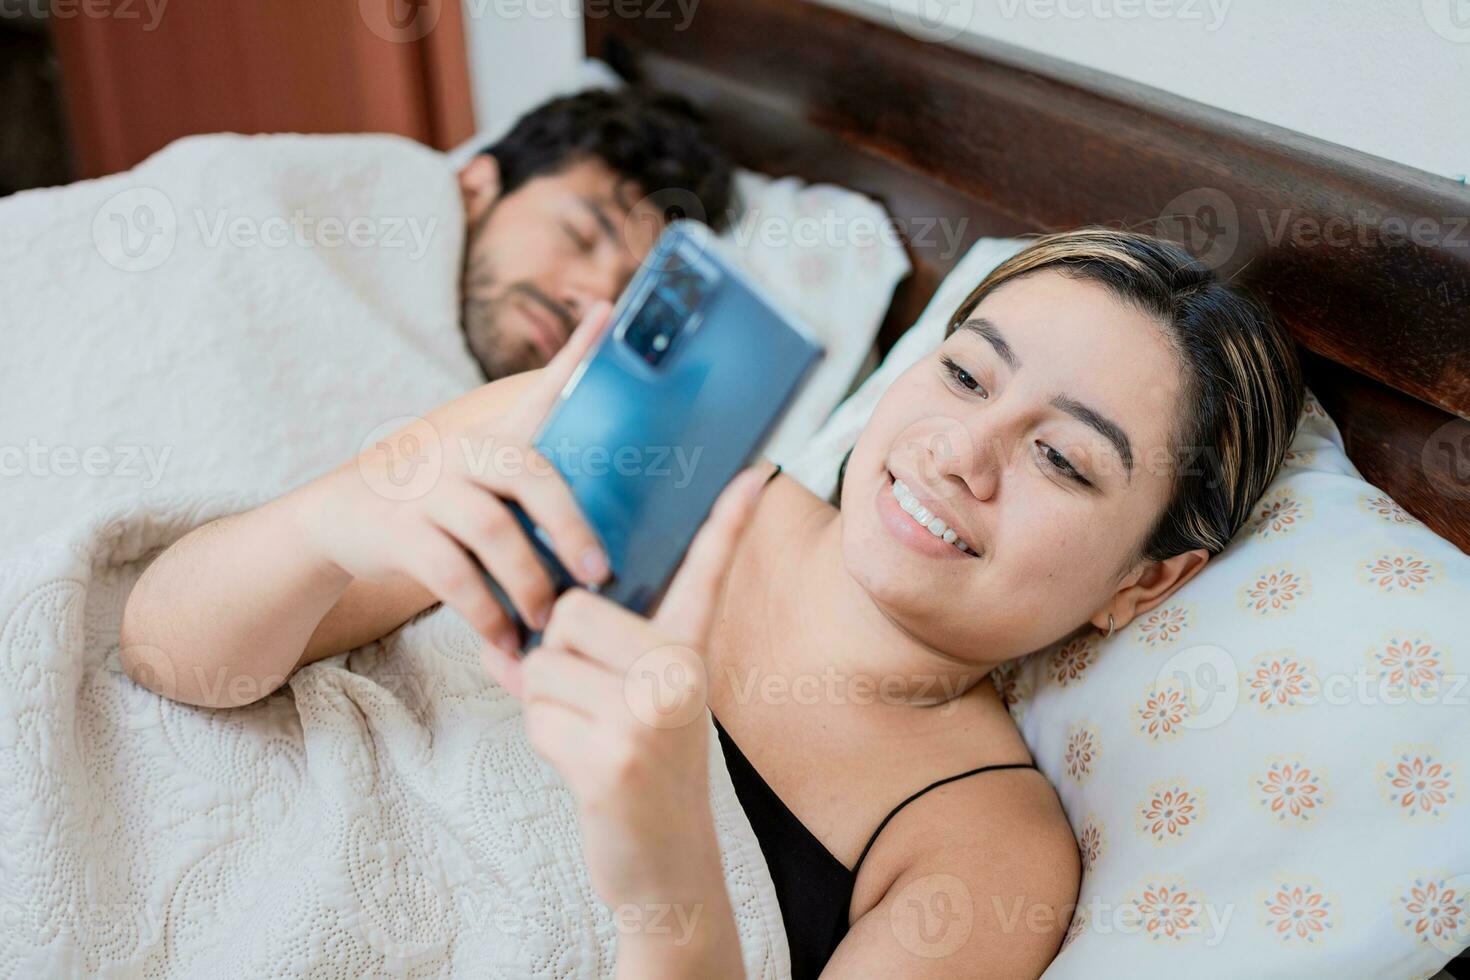 Unfaithful wife with phone while her husband sleeps. Unfaithful woman with phone while the man sleeps. Unfaithful girlfriend with phone while boyfriend sleeps photo